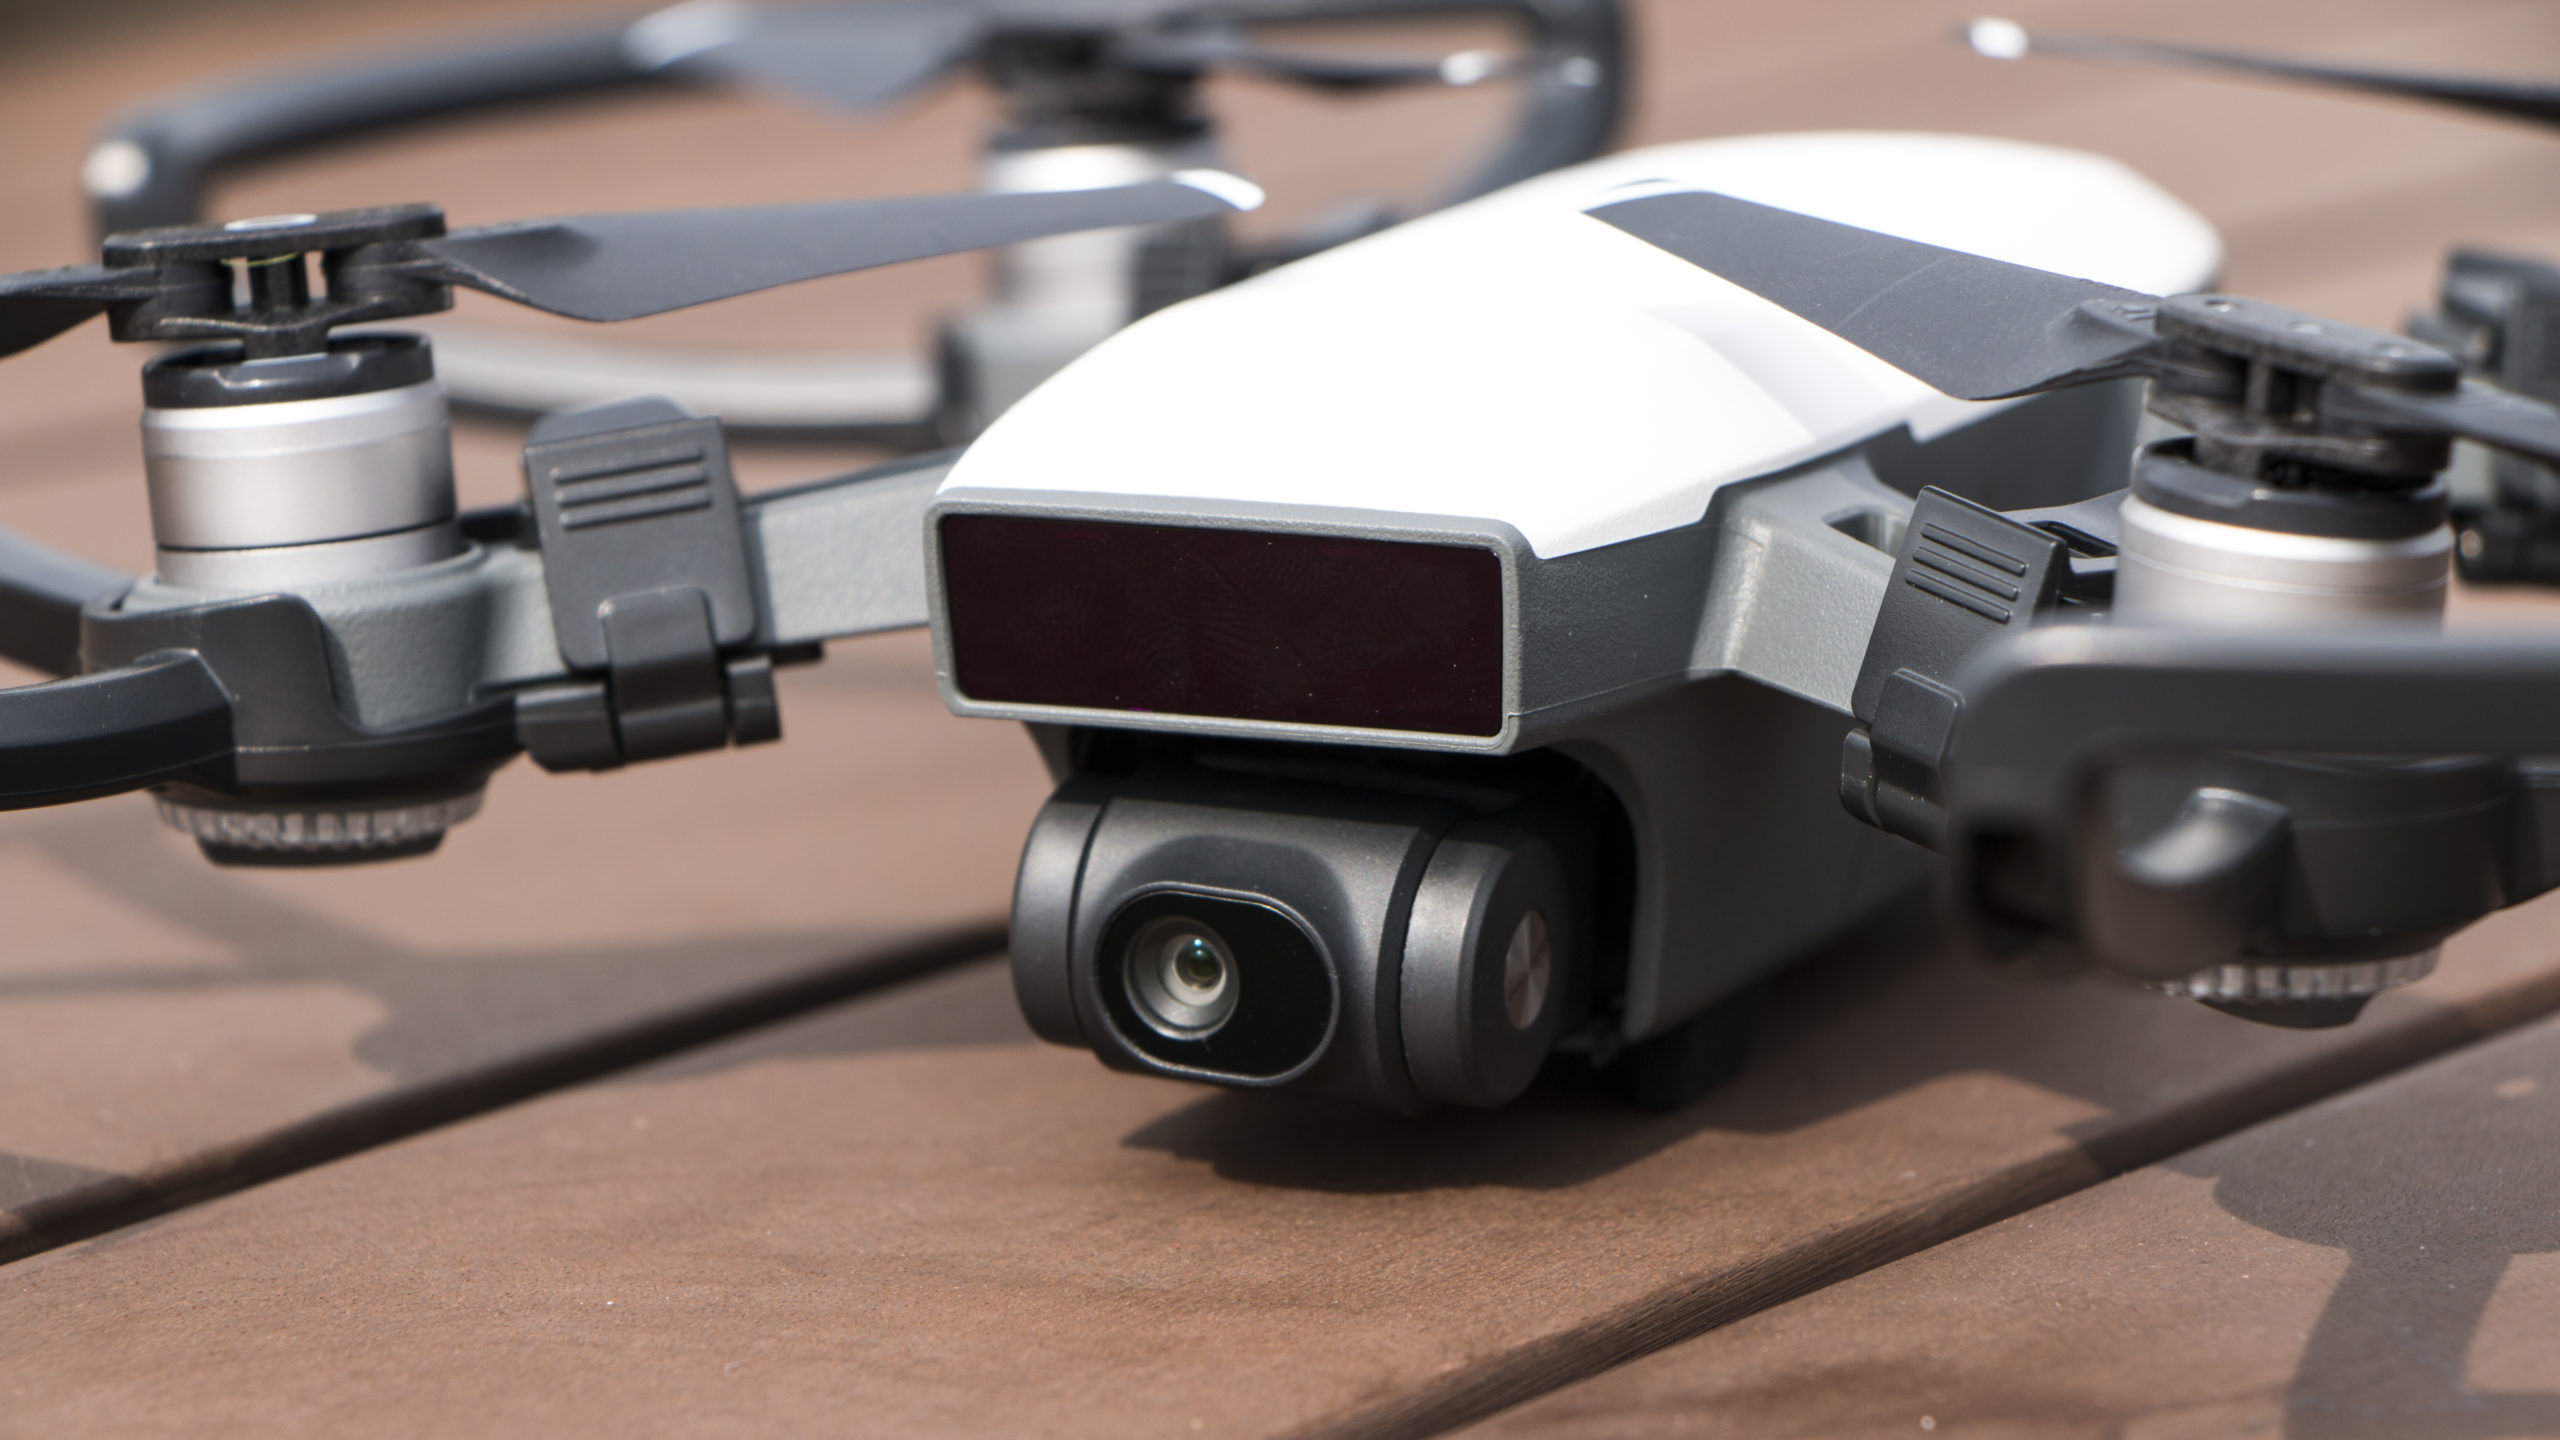 DJI Spark Drone: The Gizmodo Review